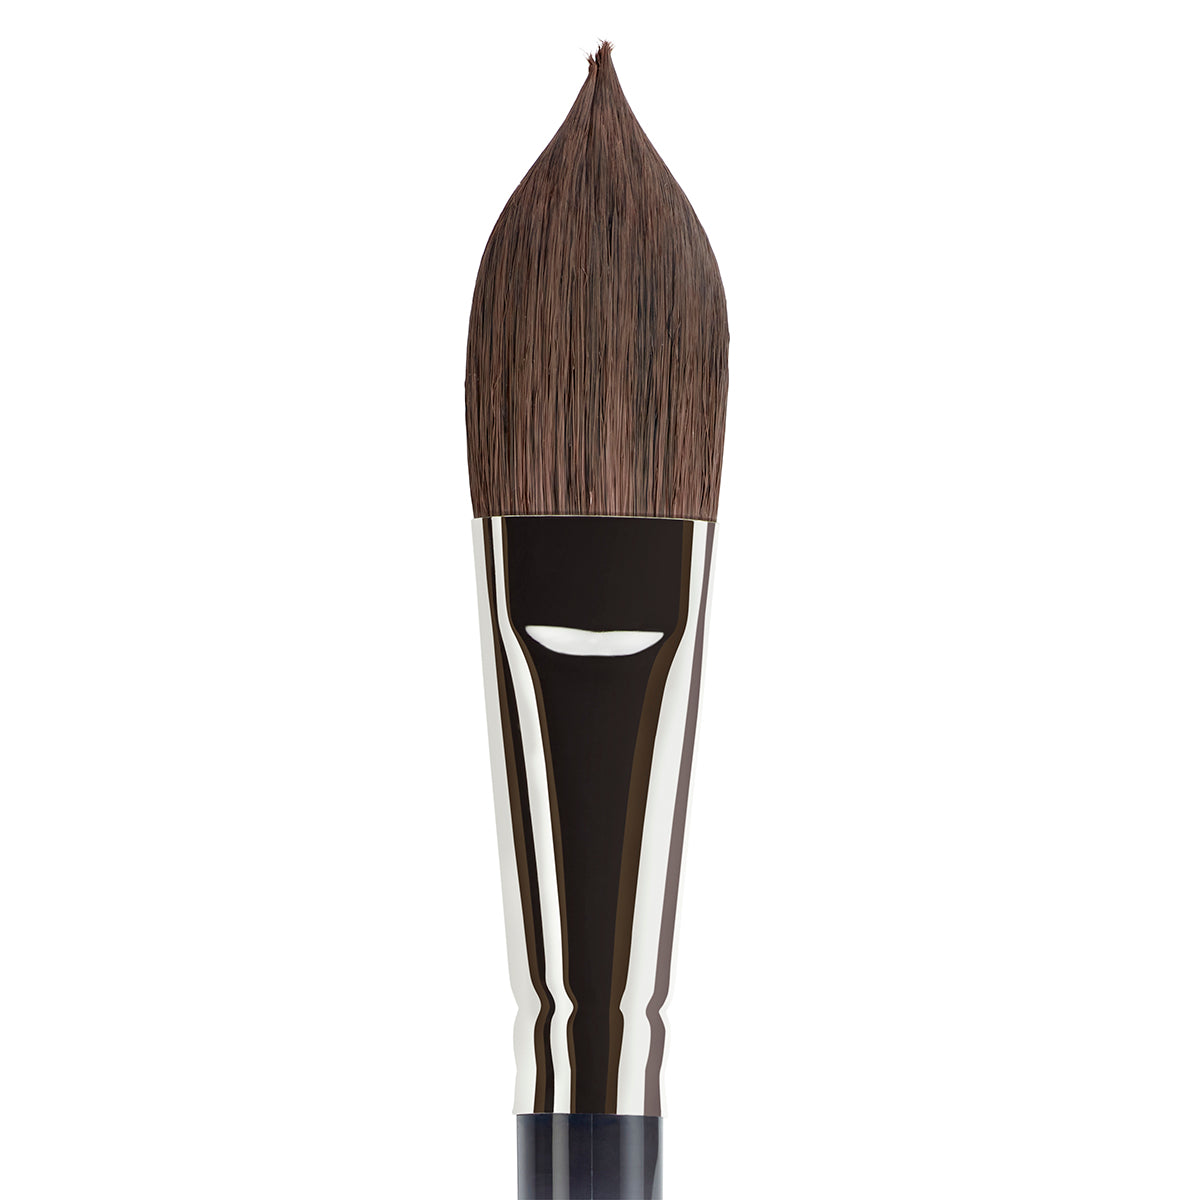 KINGART® Finesse™ Kolinsky Sable Synthetic Blend Premium Watercolor Artist  Brushes, Gift Box, Set of 8